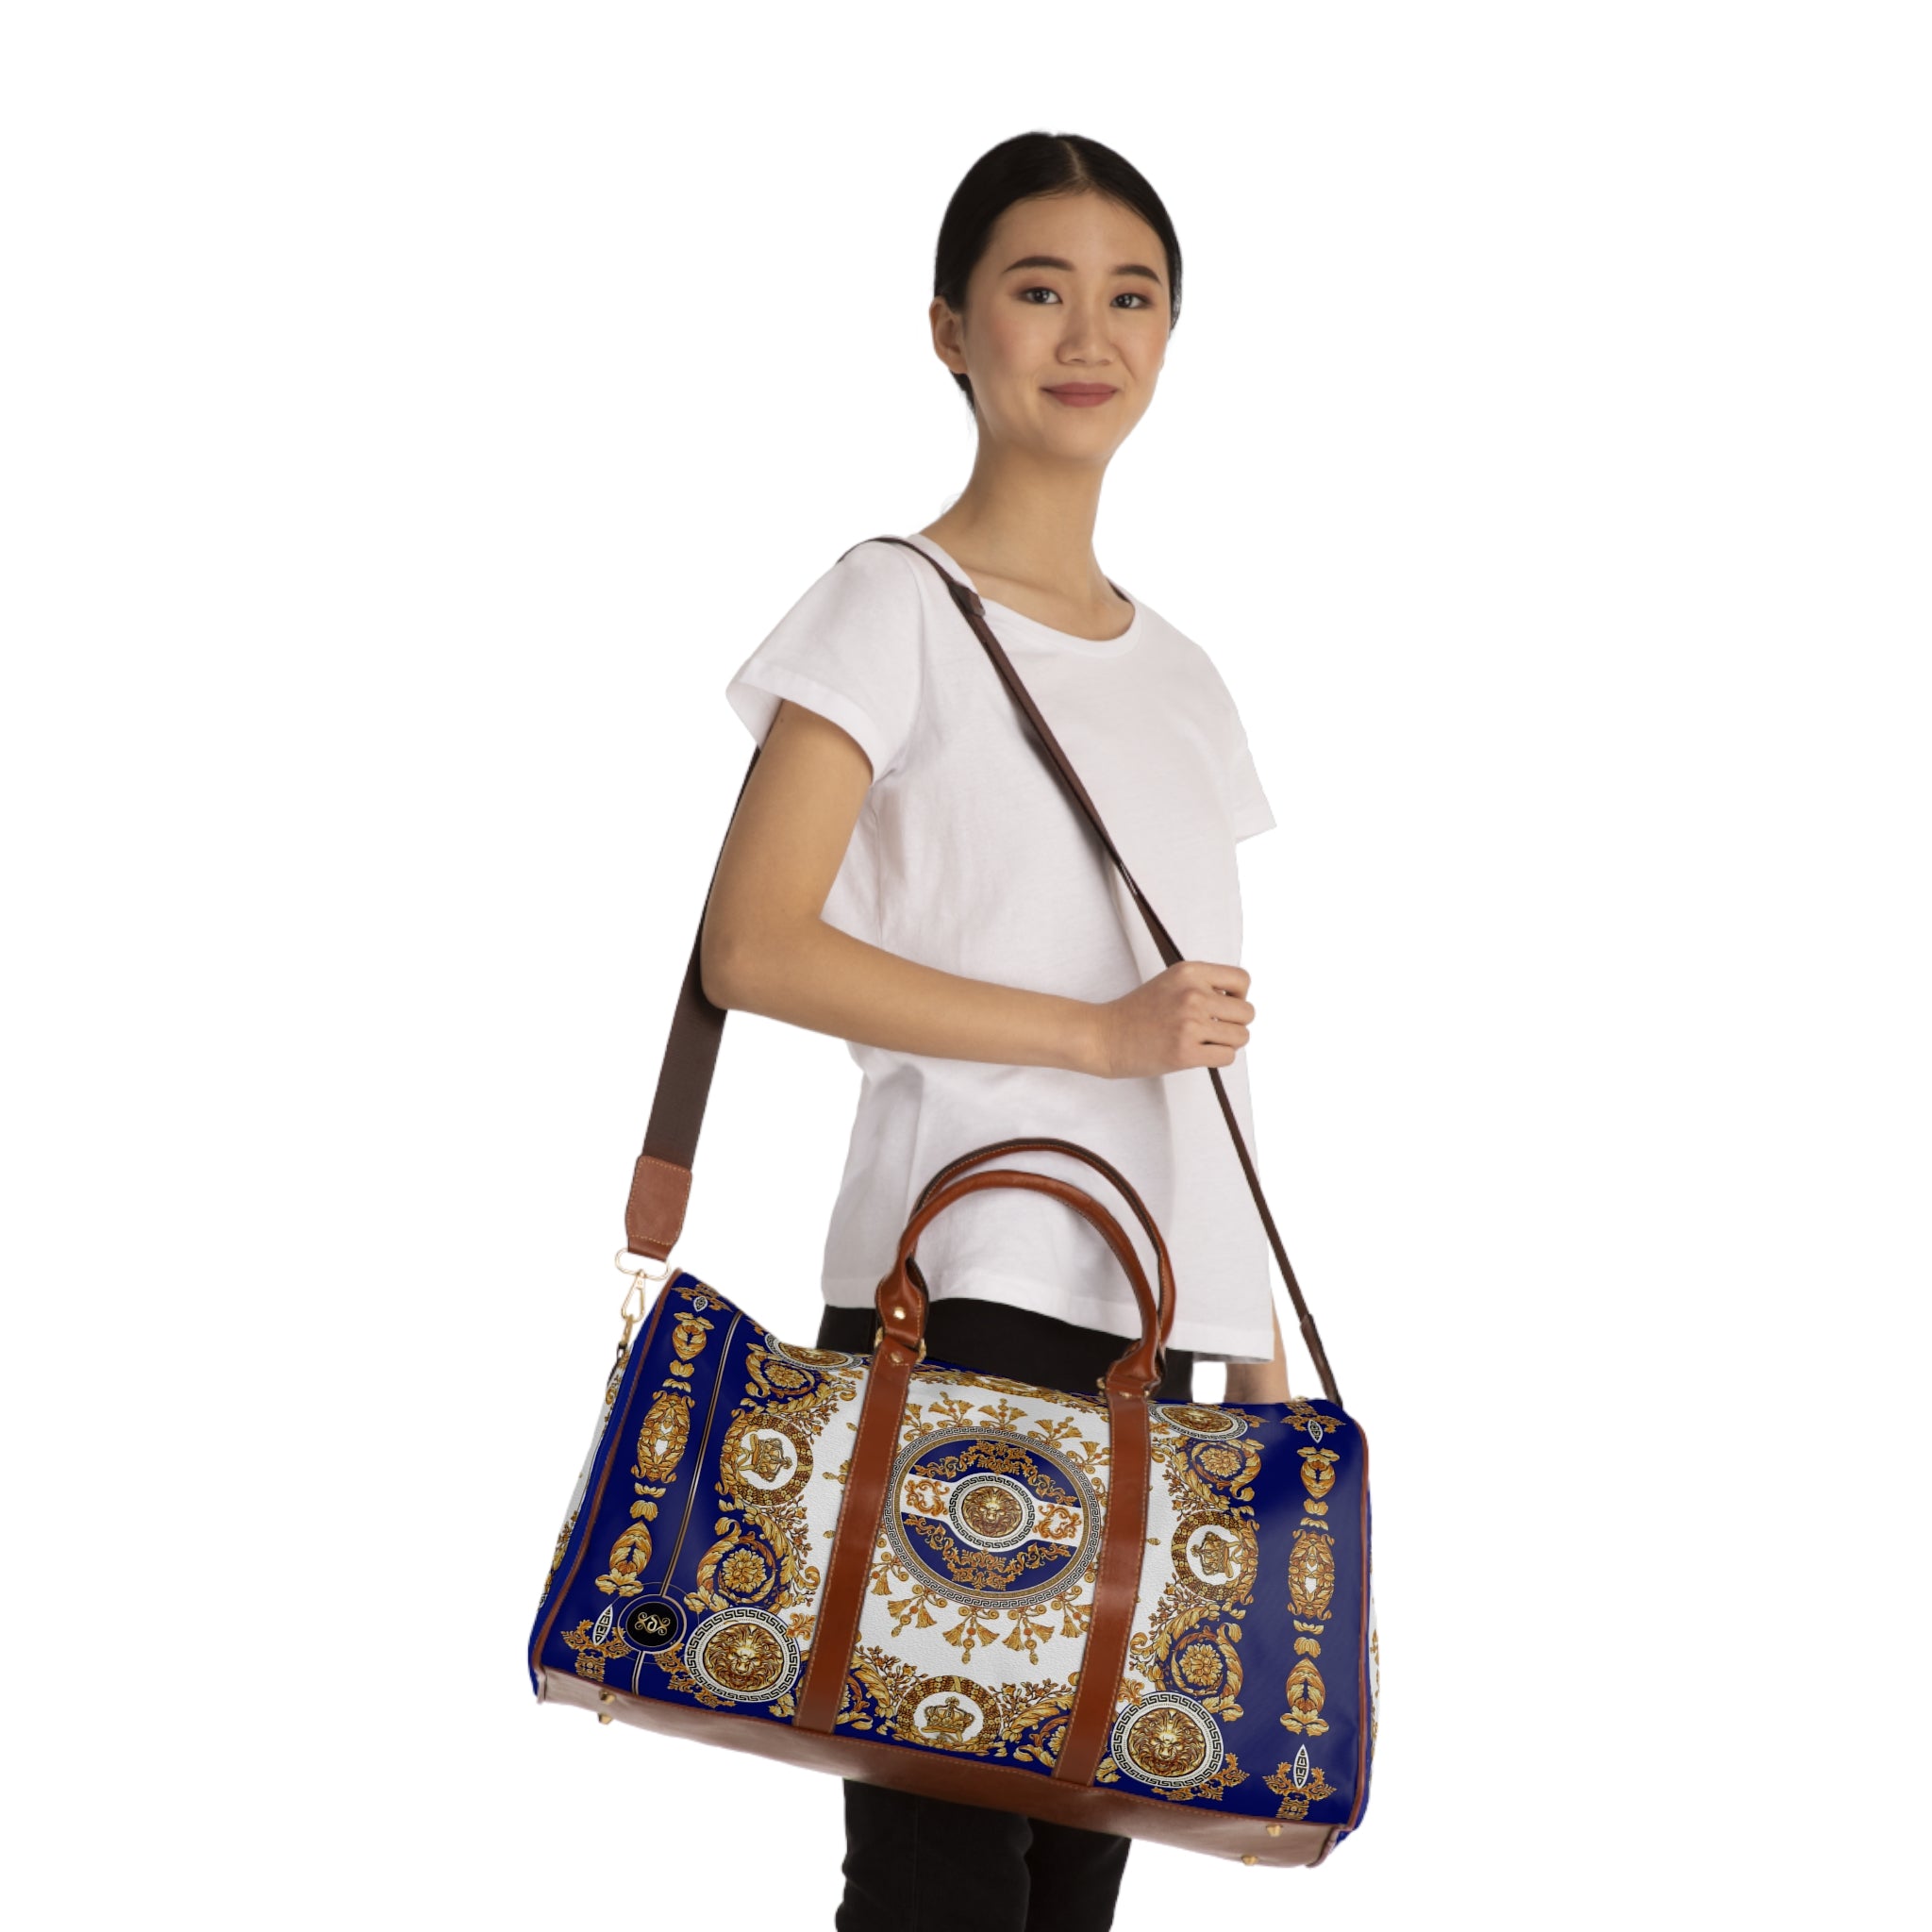 Dolce & Gabbana Royal Blue Bag